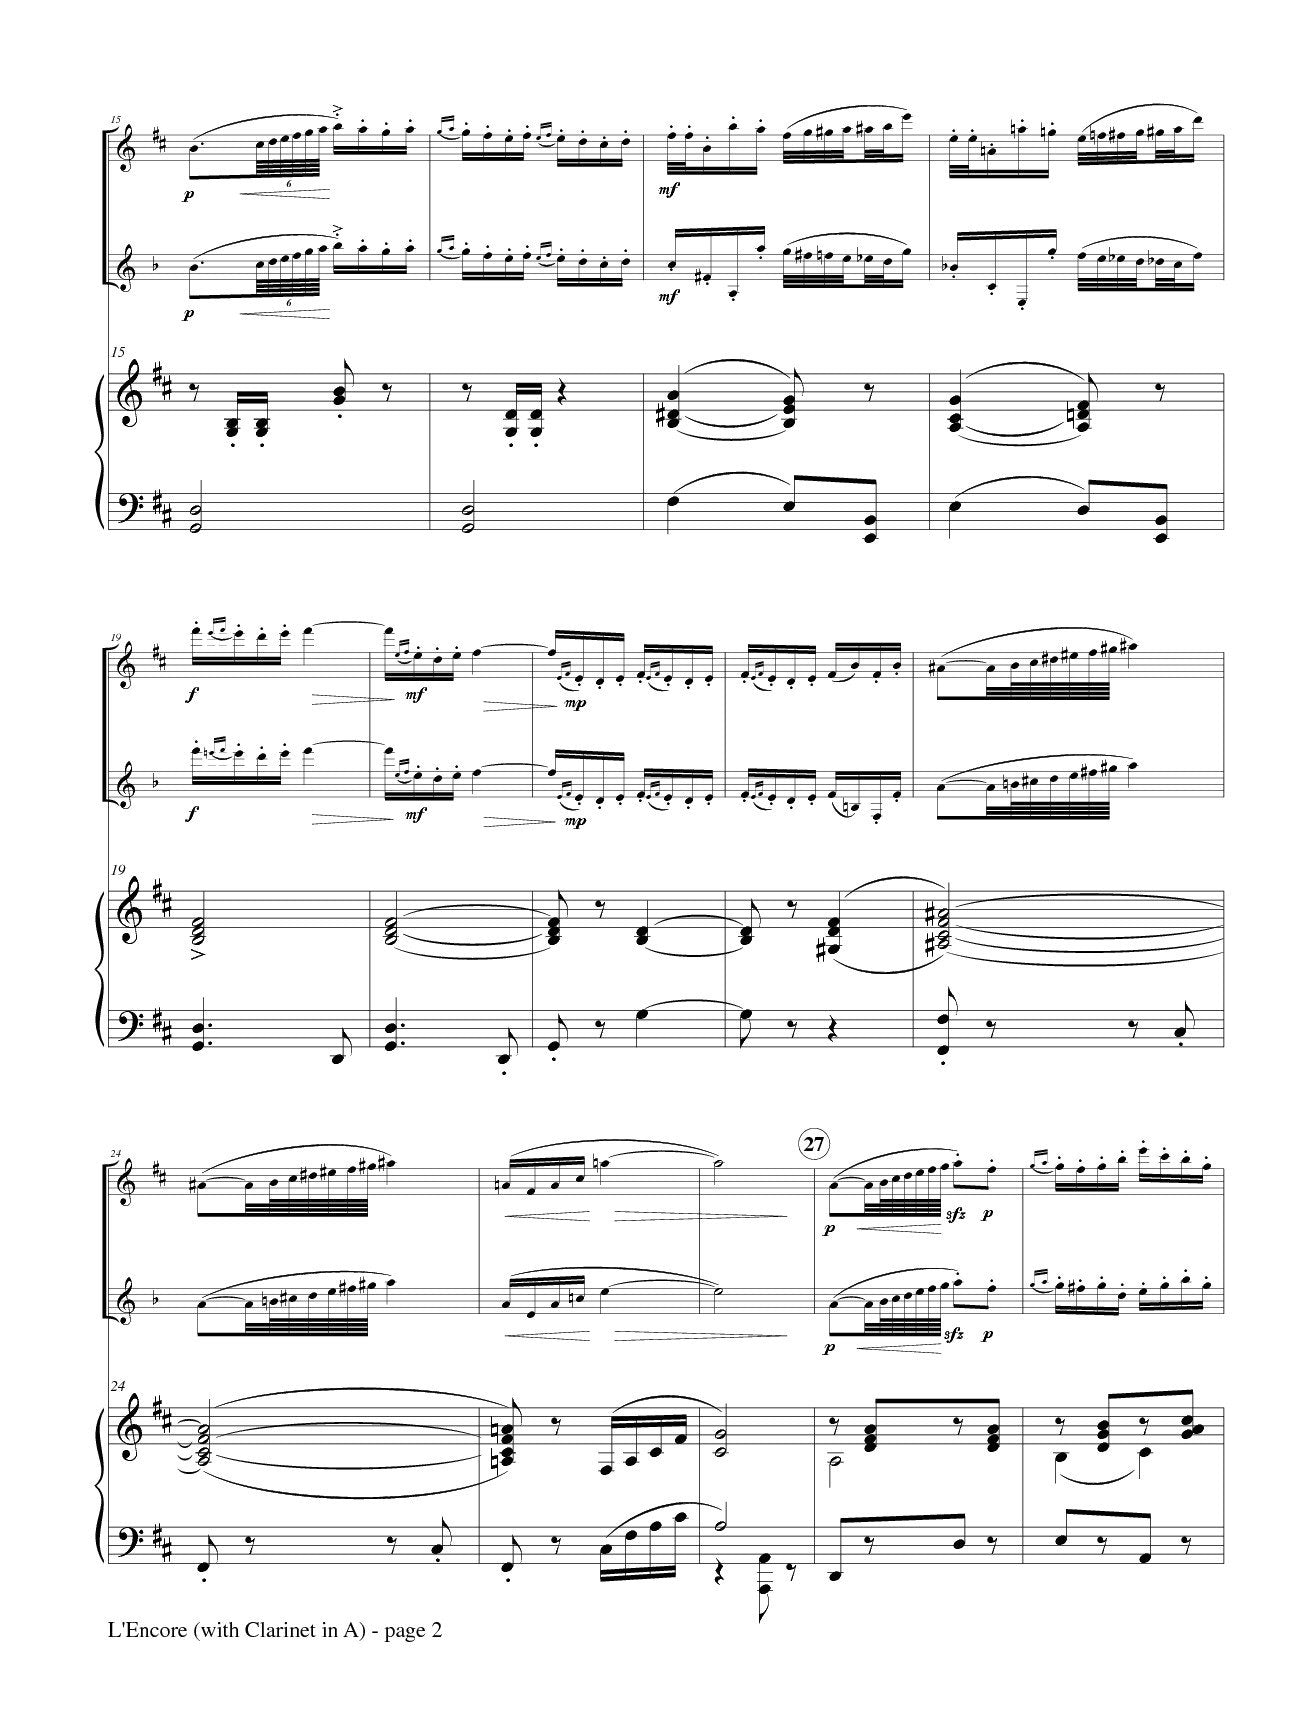 Herbert, Victor - L'Encore for Flute, Clarinet and Piano arr Matt Johnson